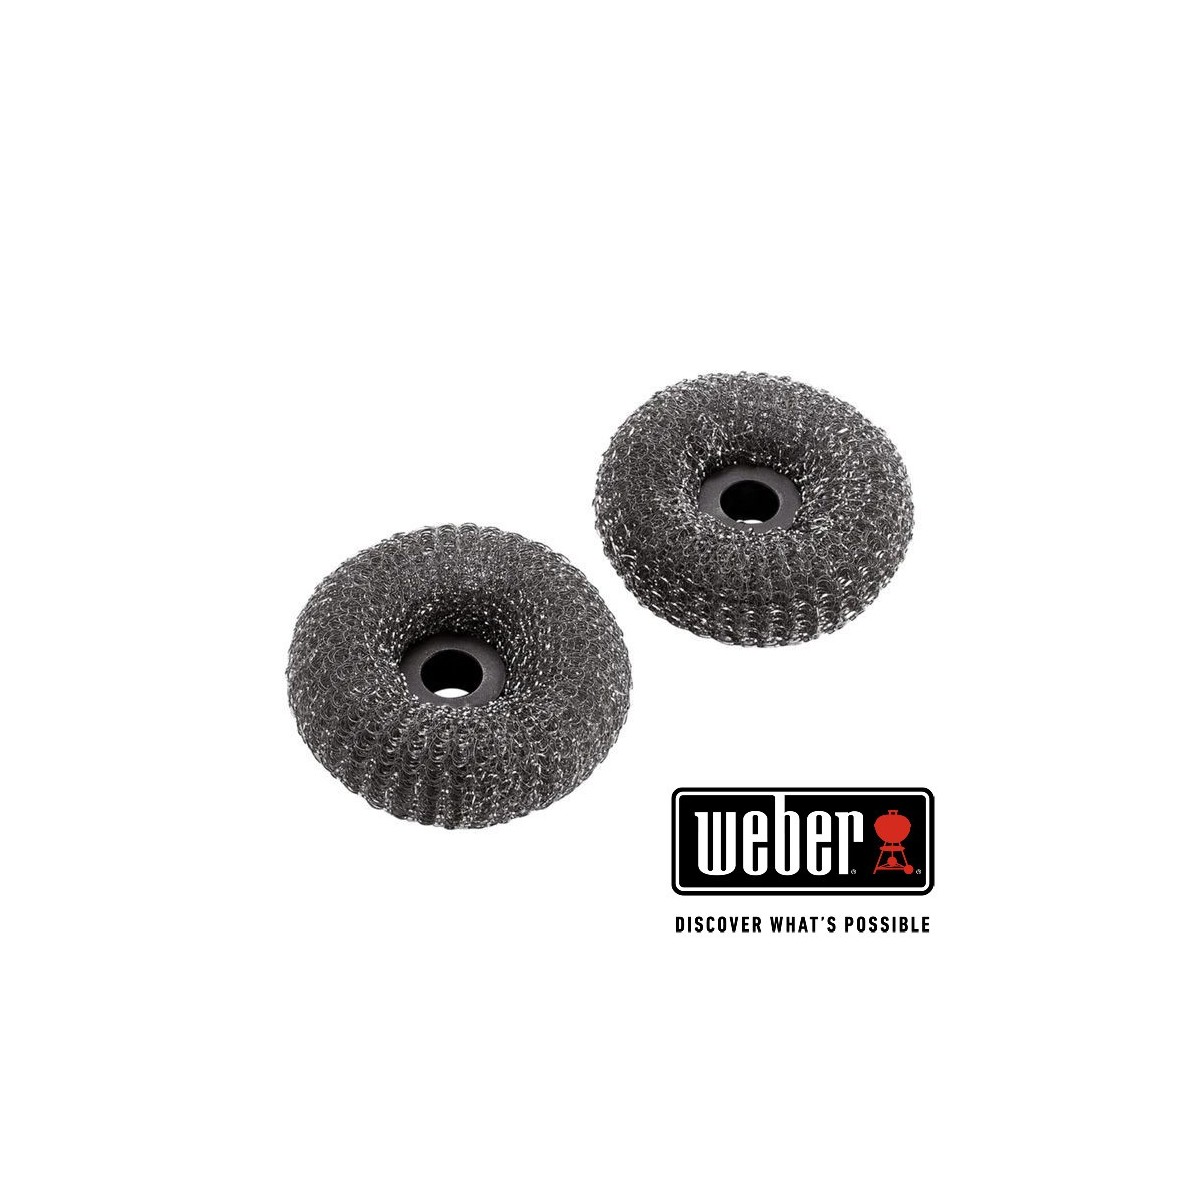 WEBER Weber Scrub Brush Replacement Heads (2 pk), 6283